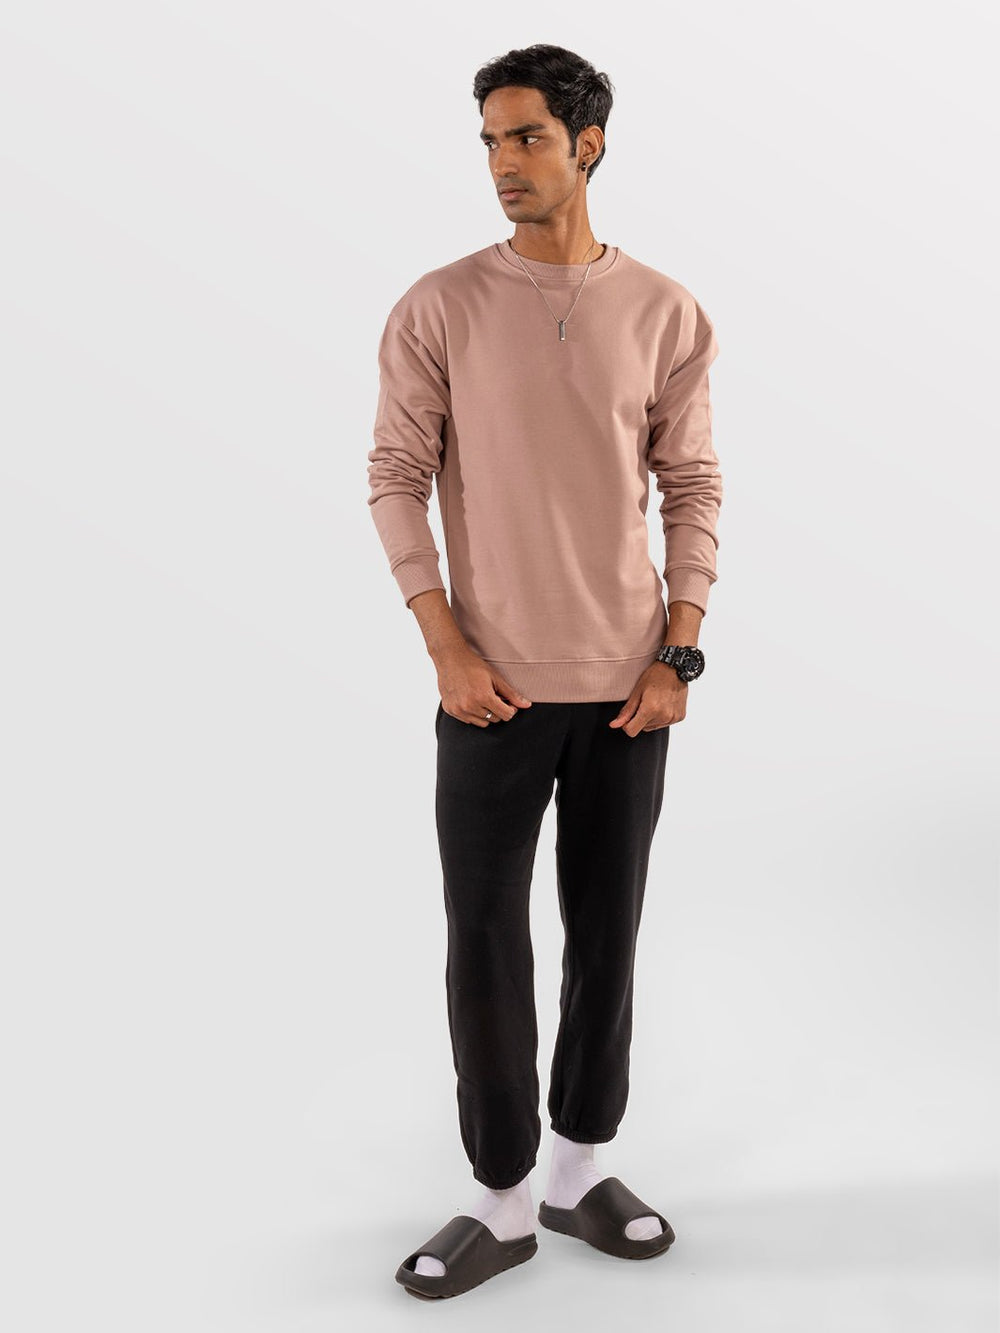 Solids: Onion Pink Sweatshirt front view 2